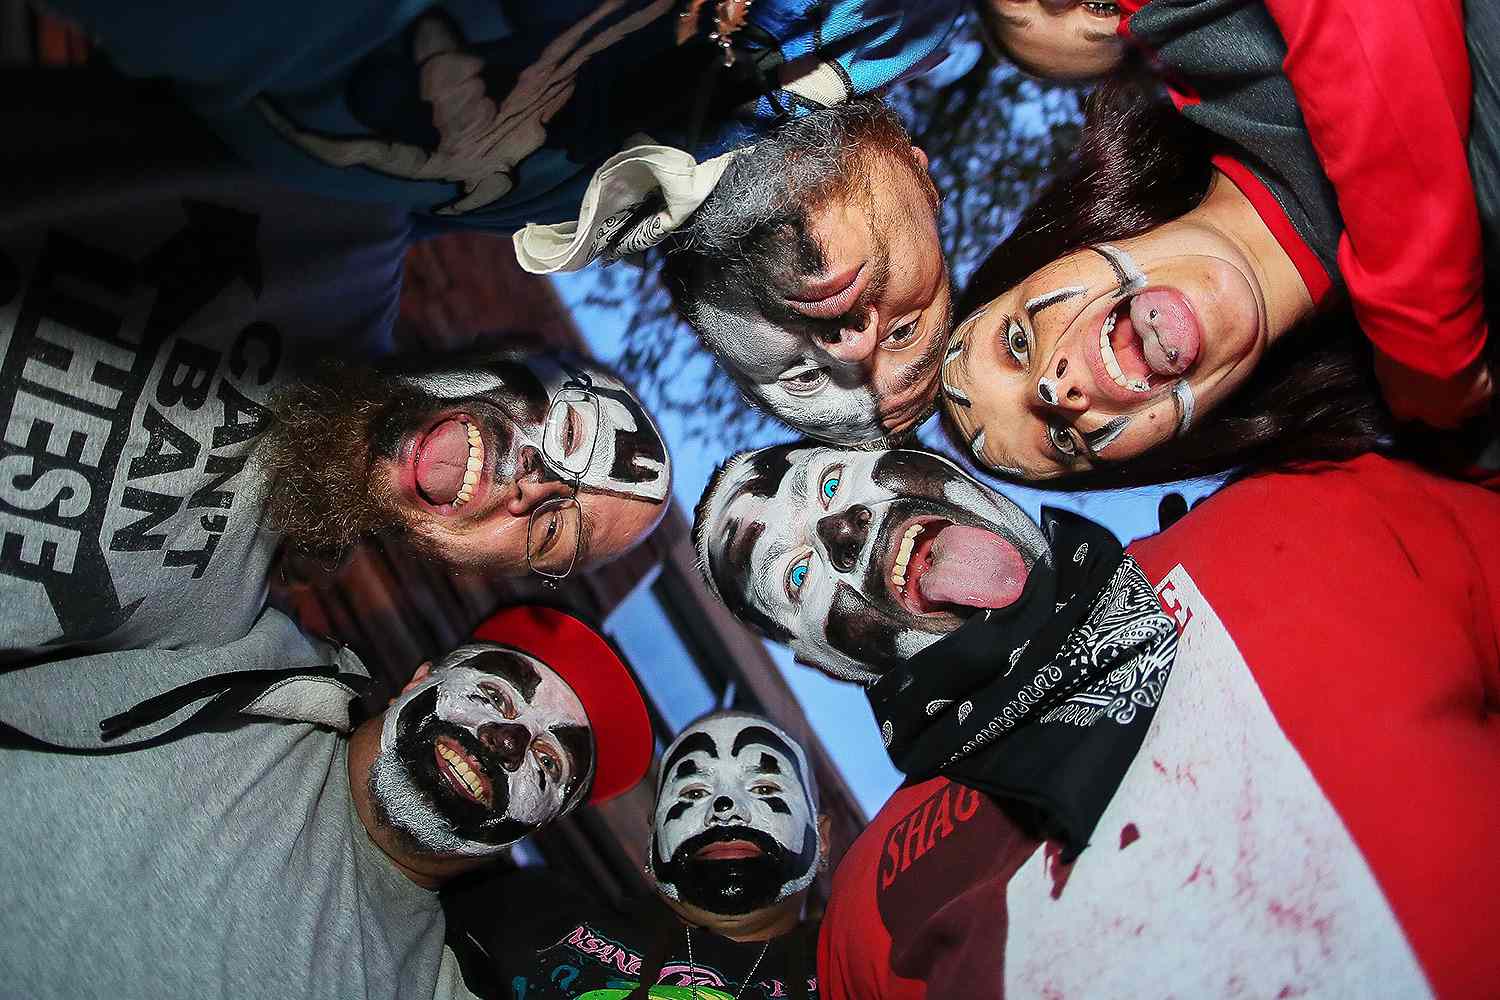 GOTJ gathering of the juggalos sticker icp insane clown posse twiztid  rare